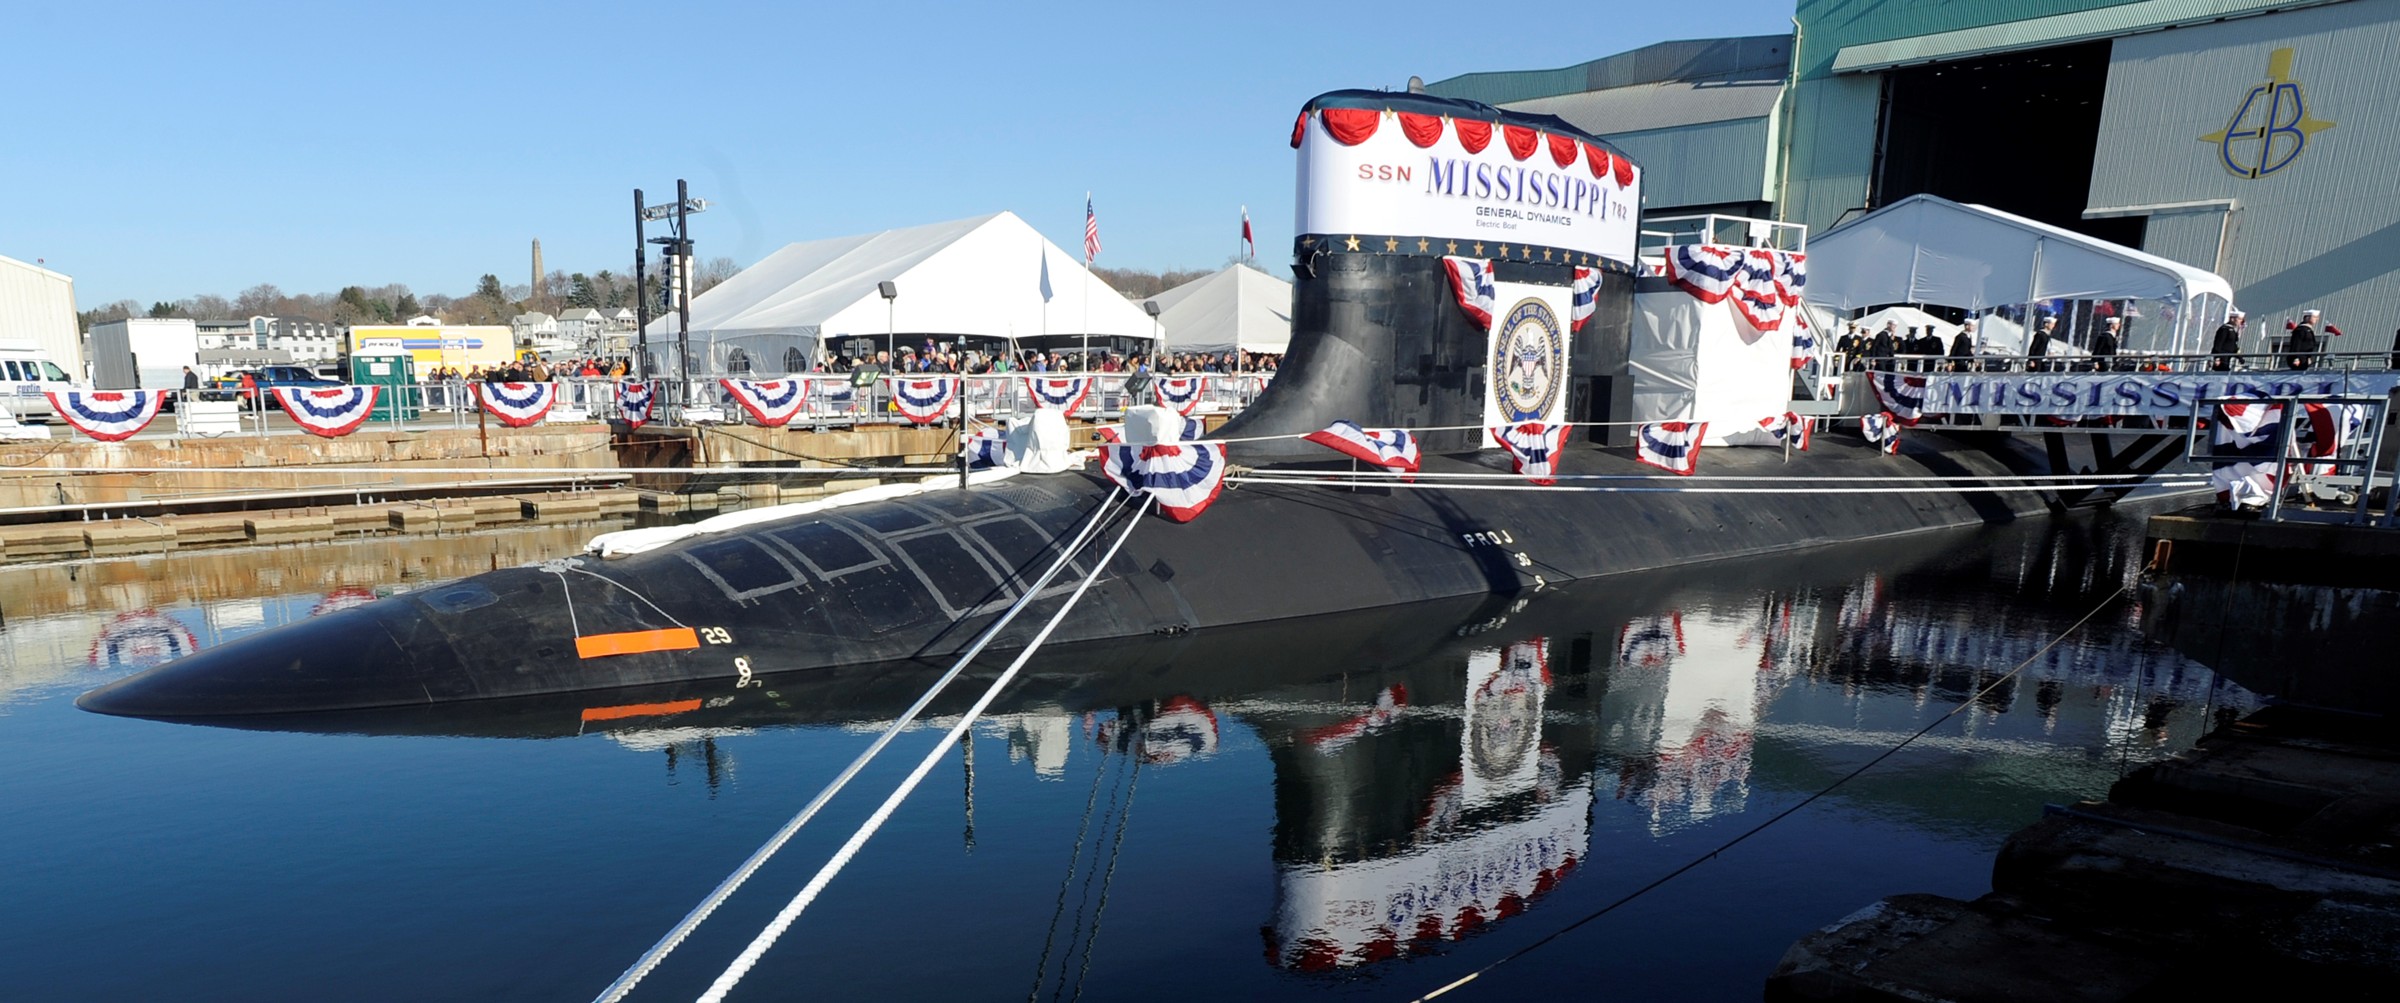 ssn-782 uss mississippi virginia class attack submarine us navy christening ceremony groton 30